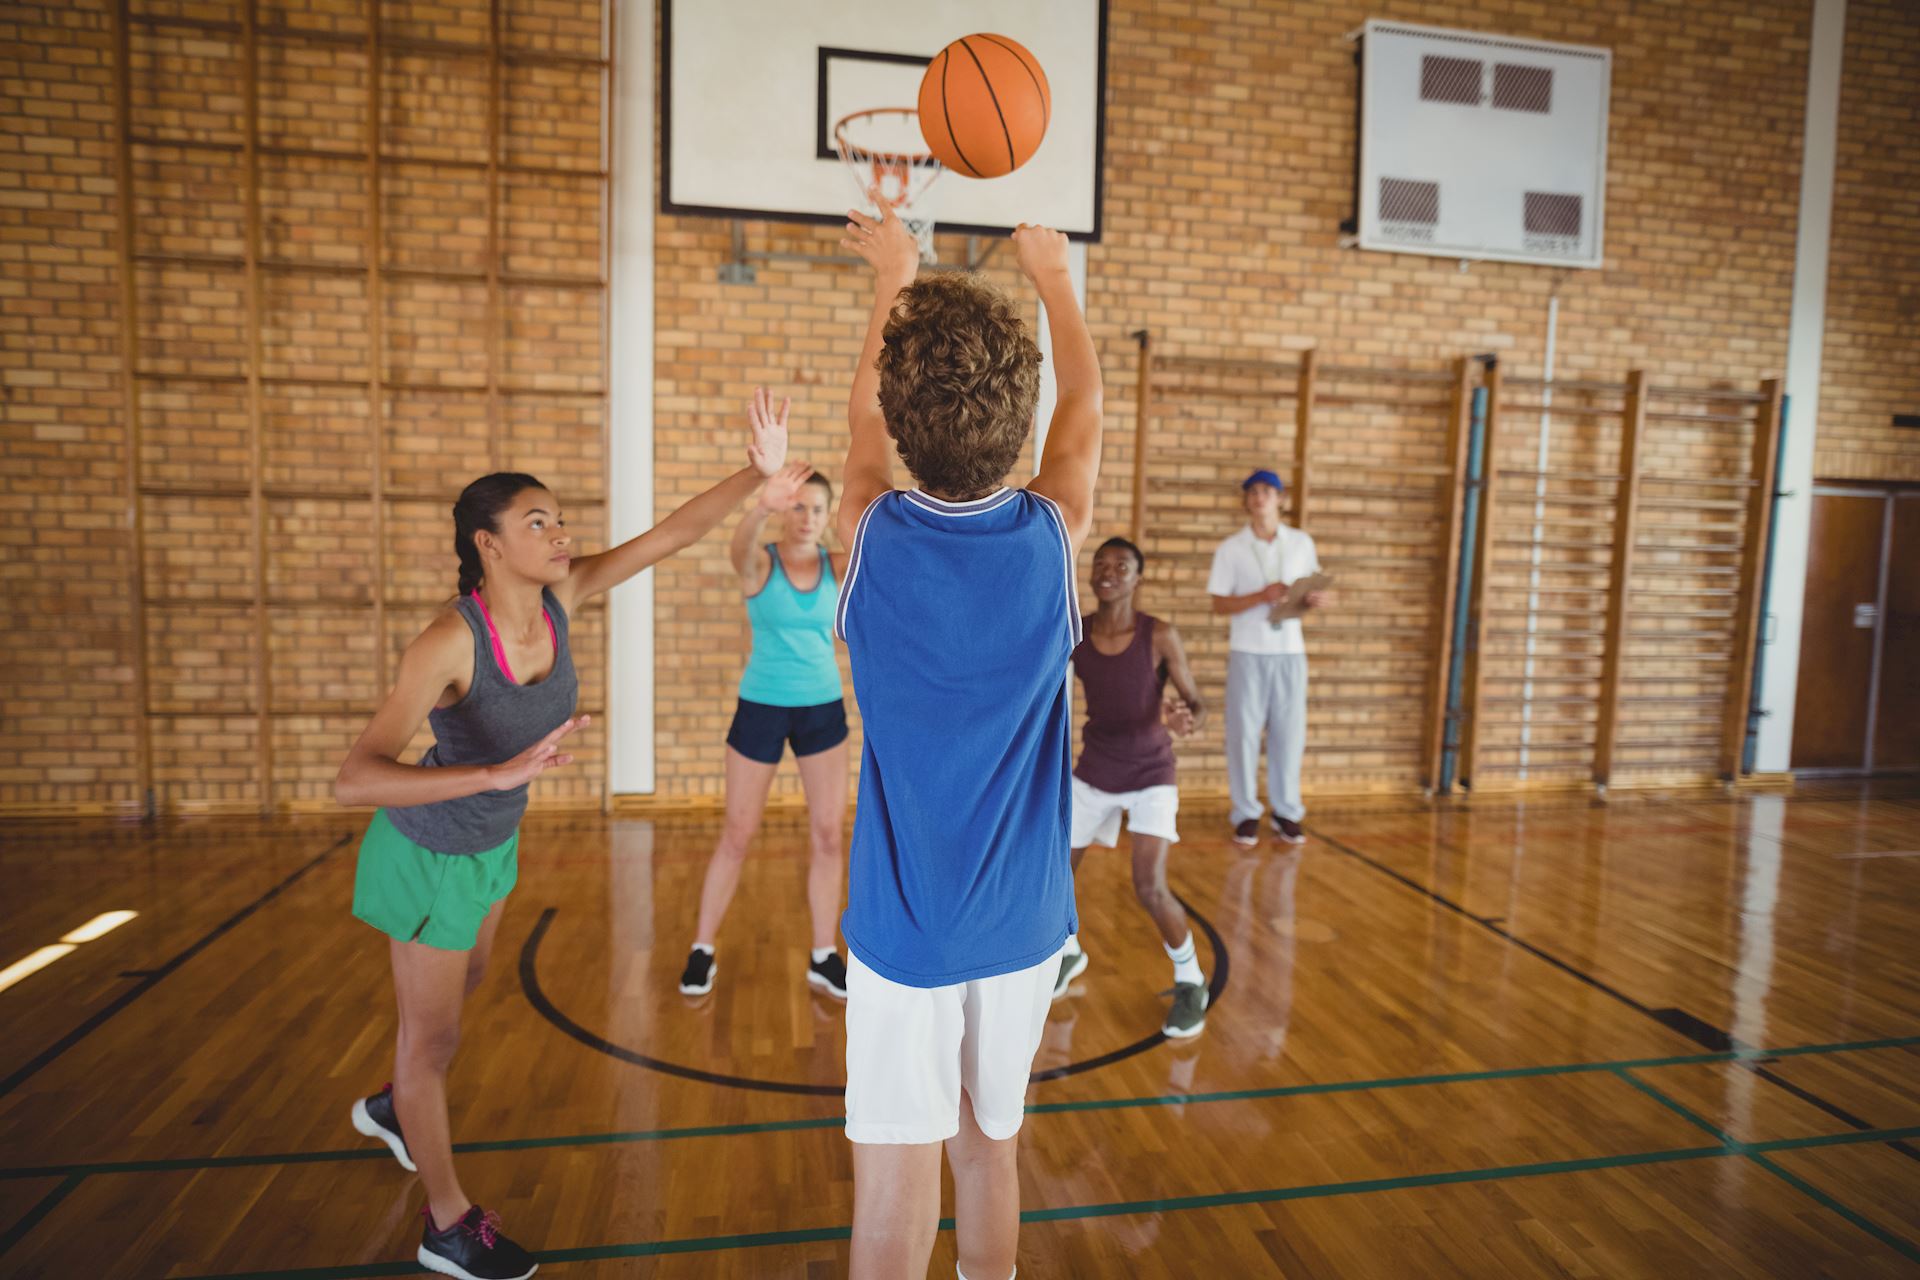 determined-high-school-kids-playing-basketball-2021-08-28-16-44-47-utc